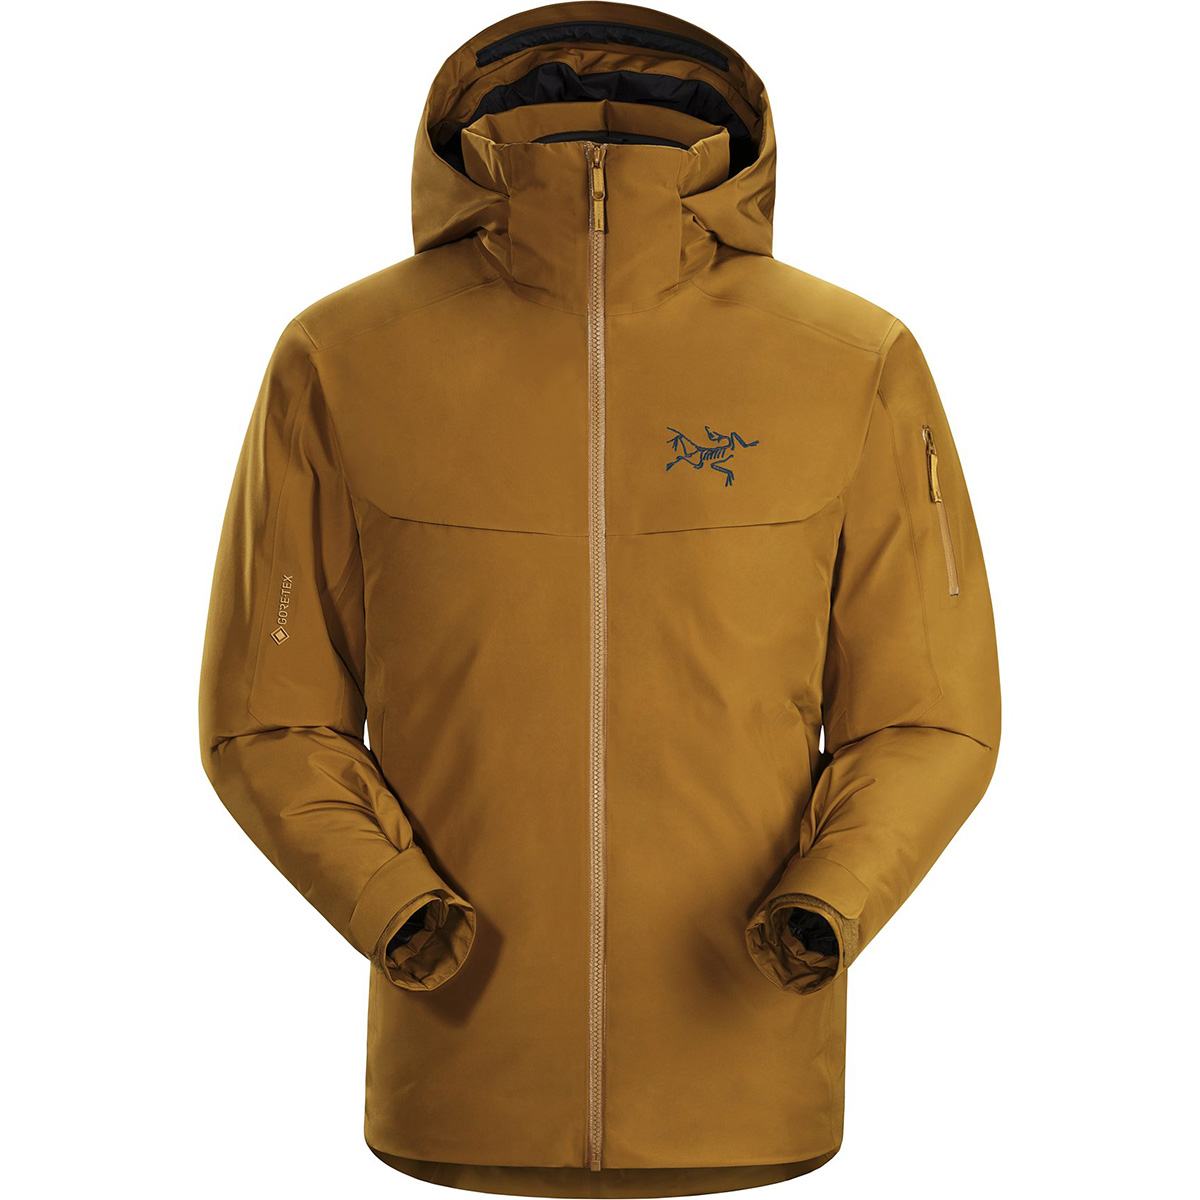 Arc'teryx Macai Jacket, men's, discontinued Fall 2019 colors (free